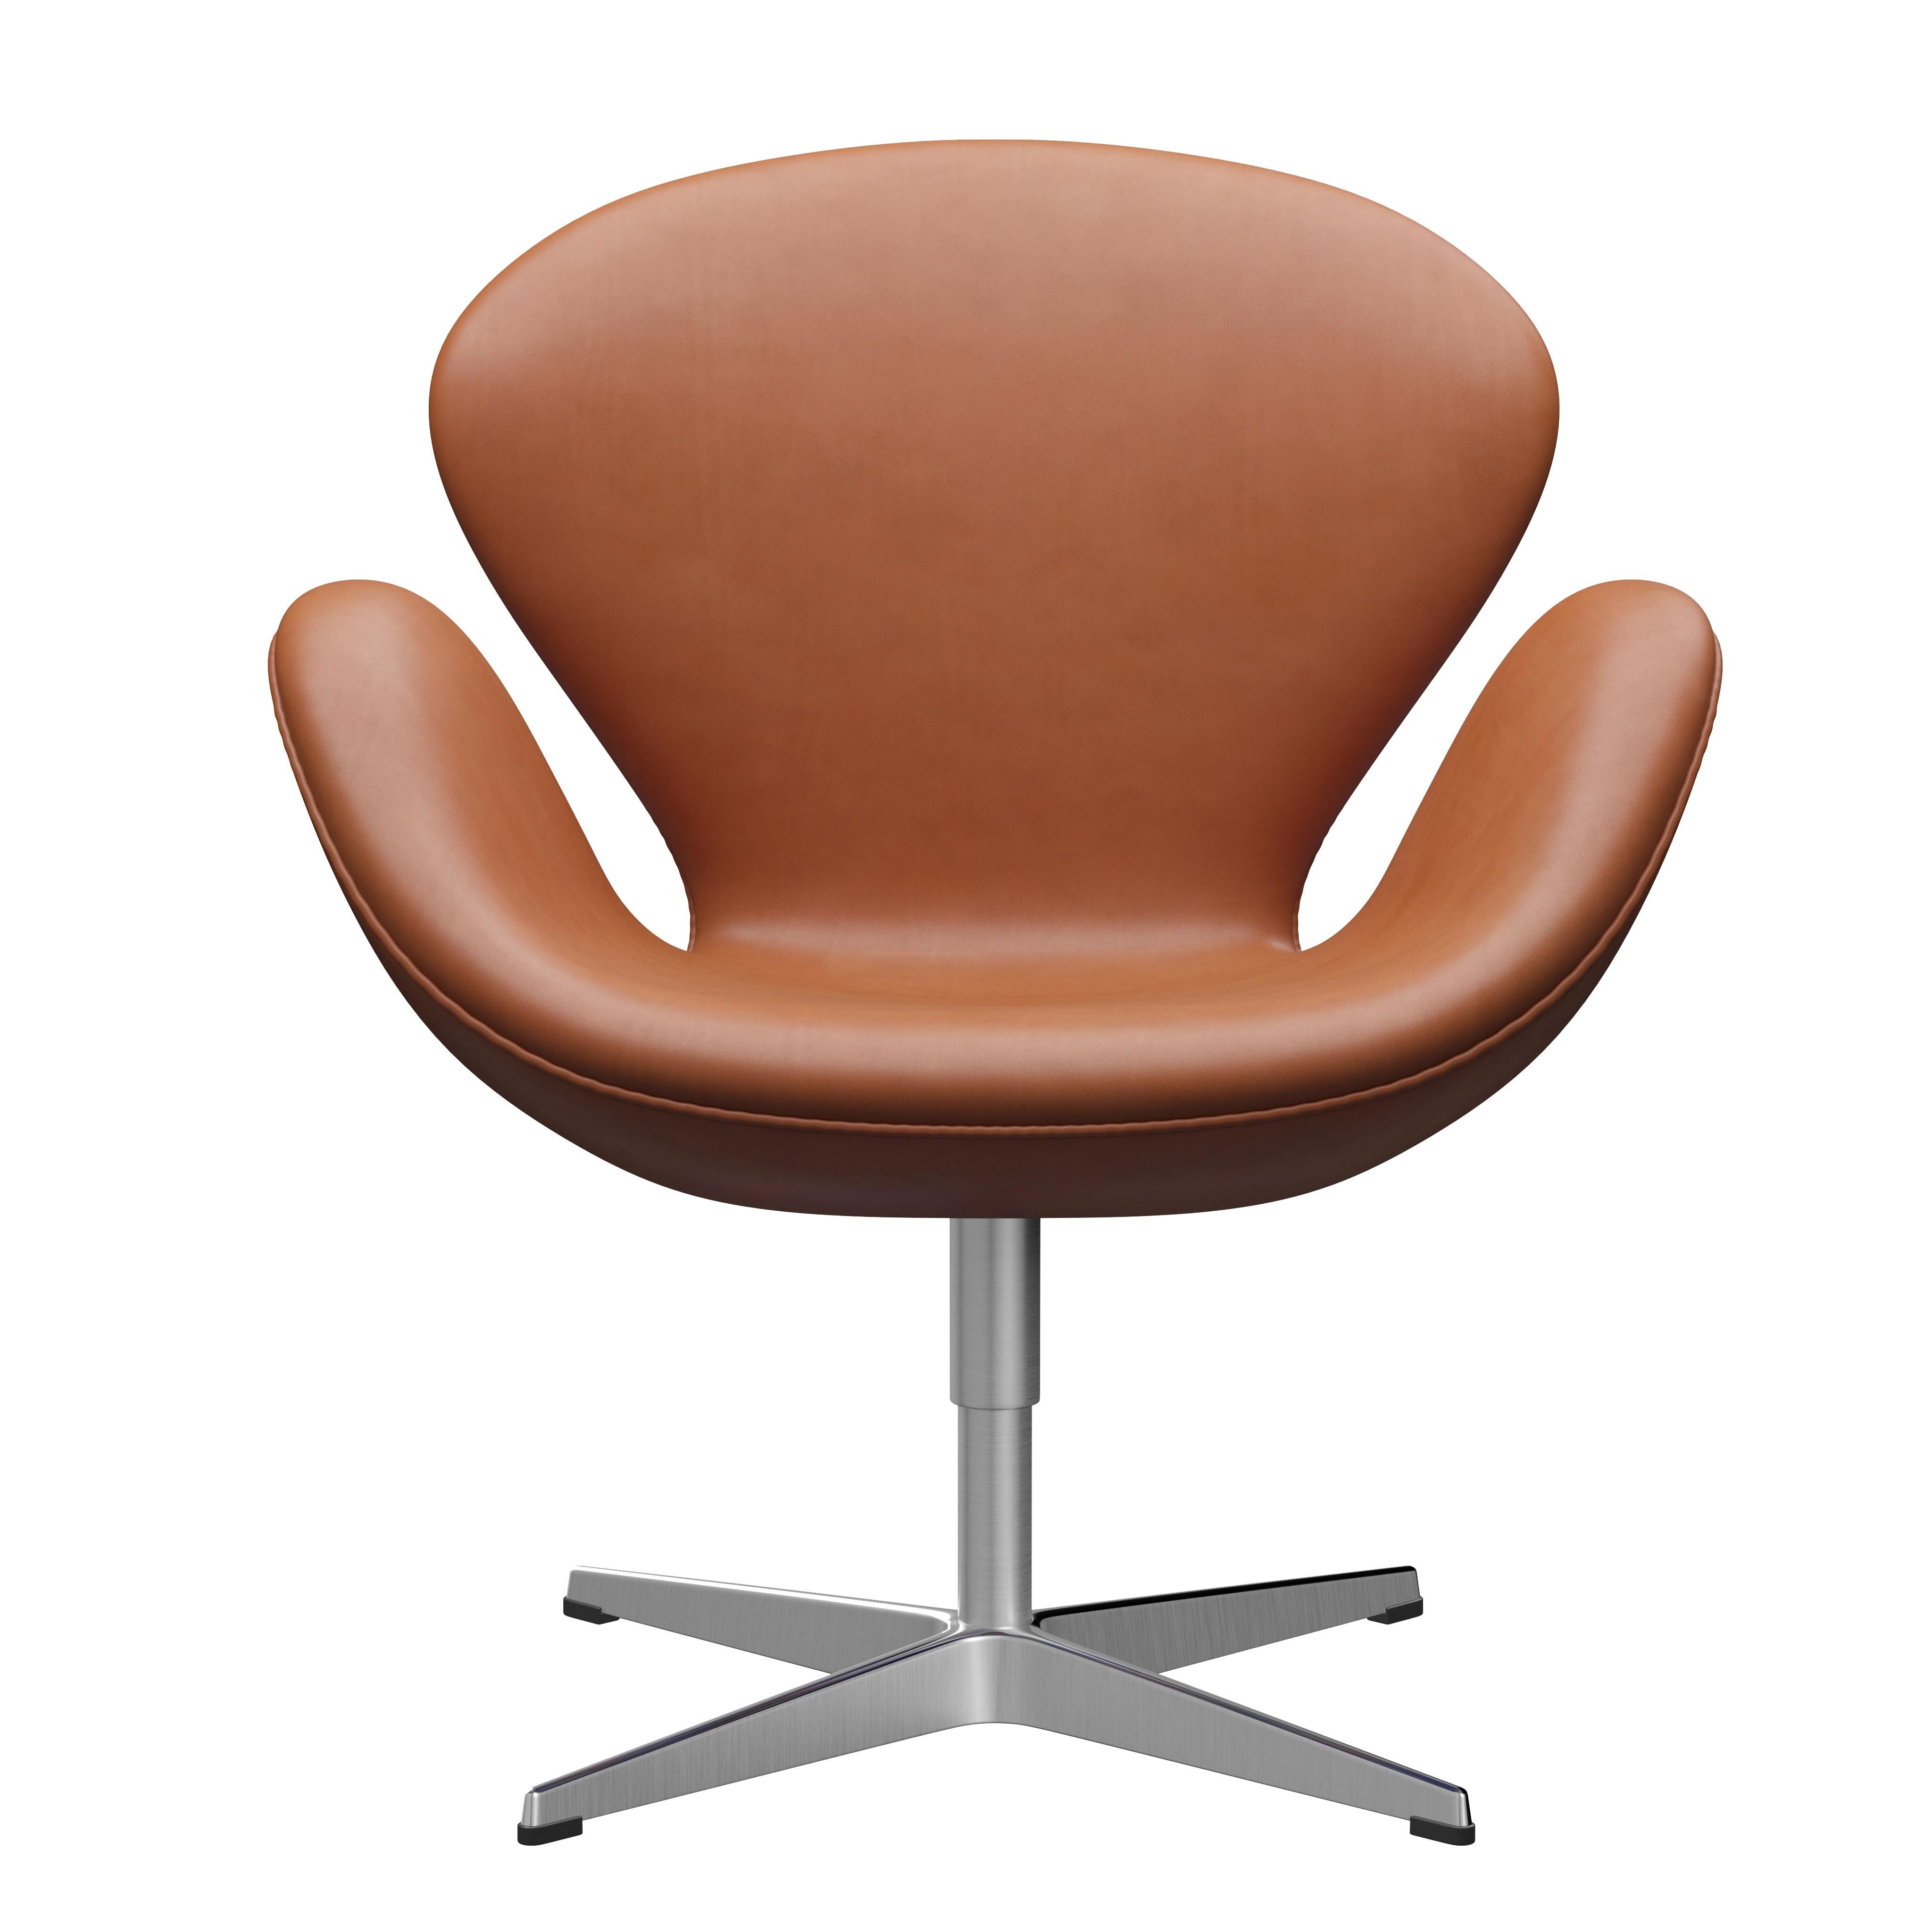 Arne Jacobsen 'Swan' Chair for Fritz Hansen in Leather Upholstery (Cat. 5) For Sale 11